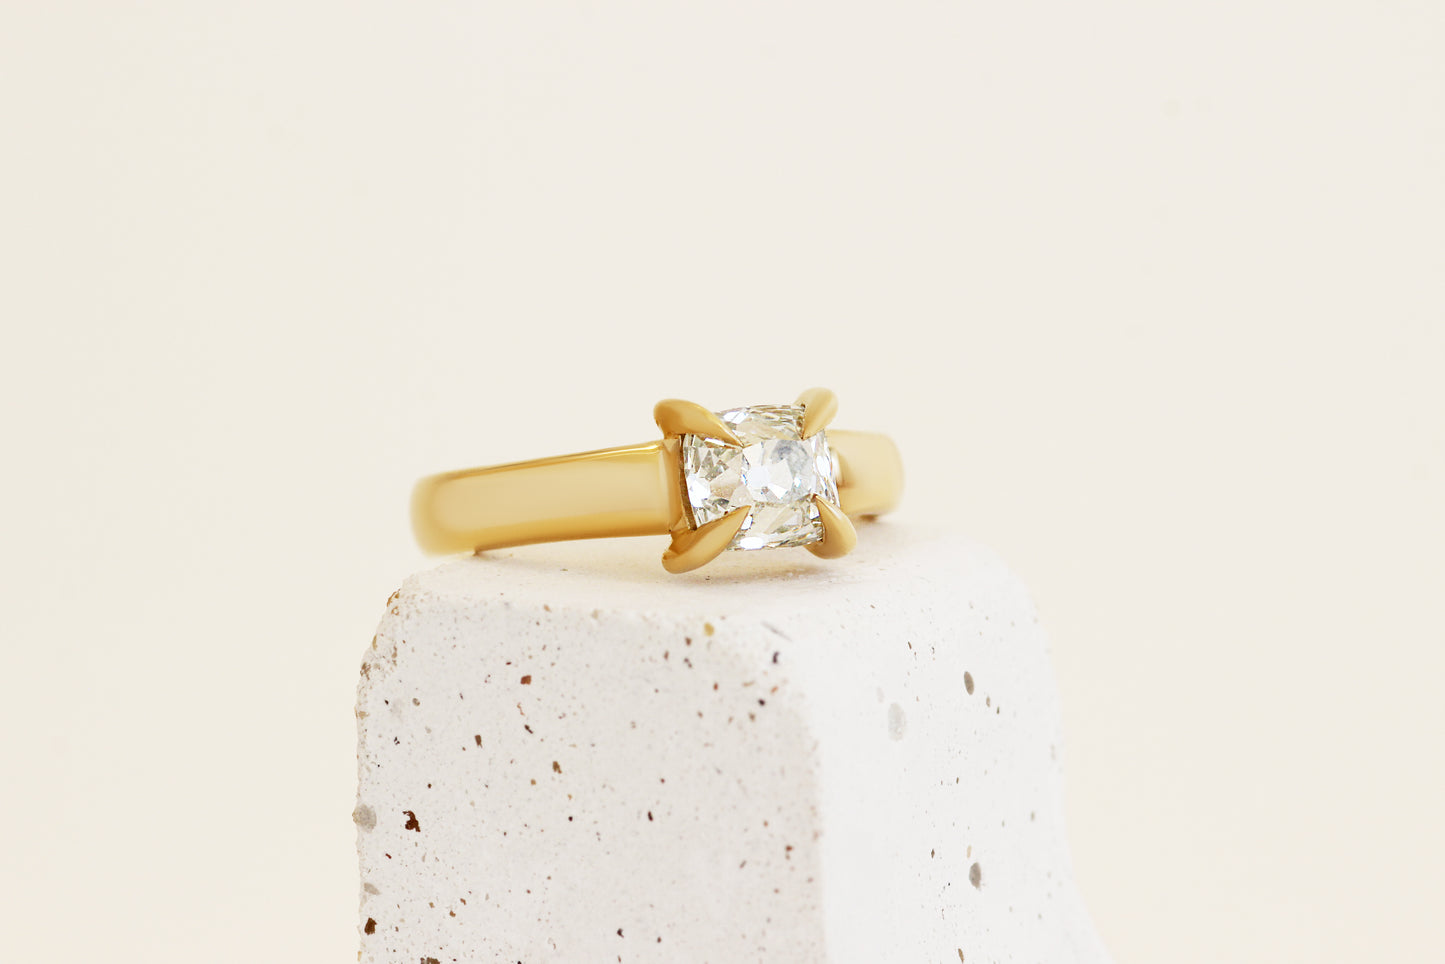 Ellipse Ring / Old Mine Cut Diamond 1.42ct - Goldpoint Studio - Greenpoint, Brooklyn - Fine Jewelry